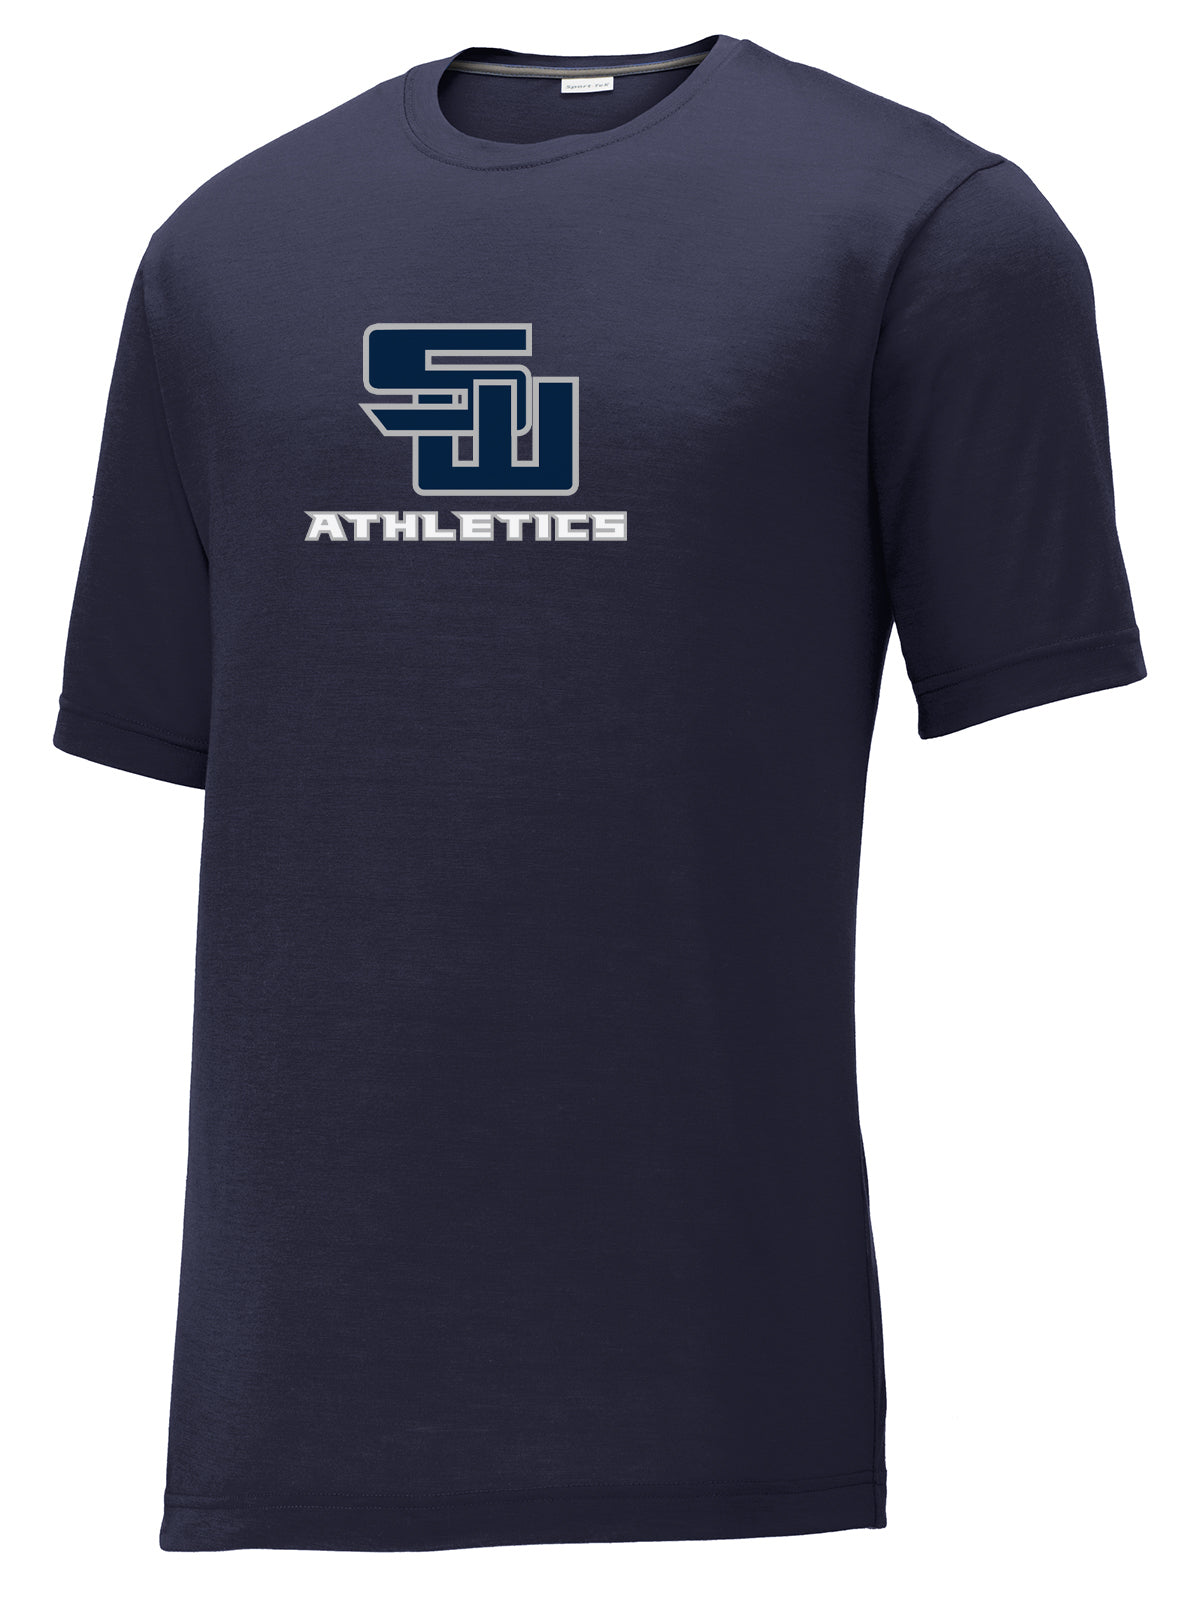 Smithtown West Athletics CottonTouch Performance T-Shirt